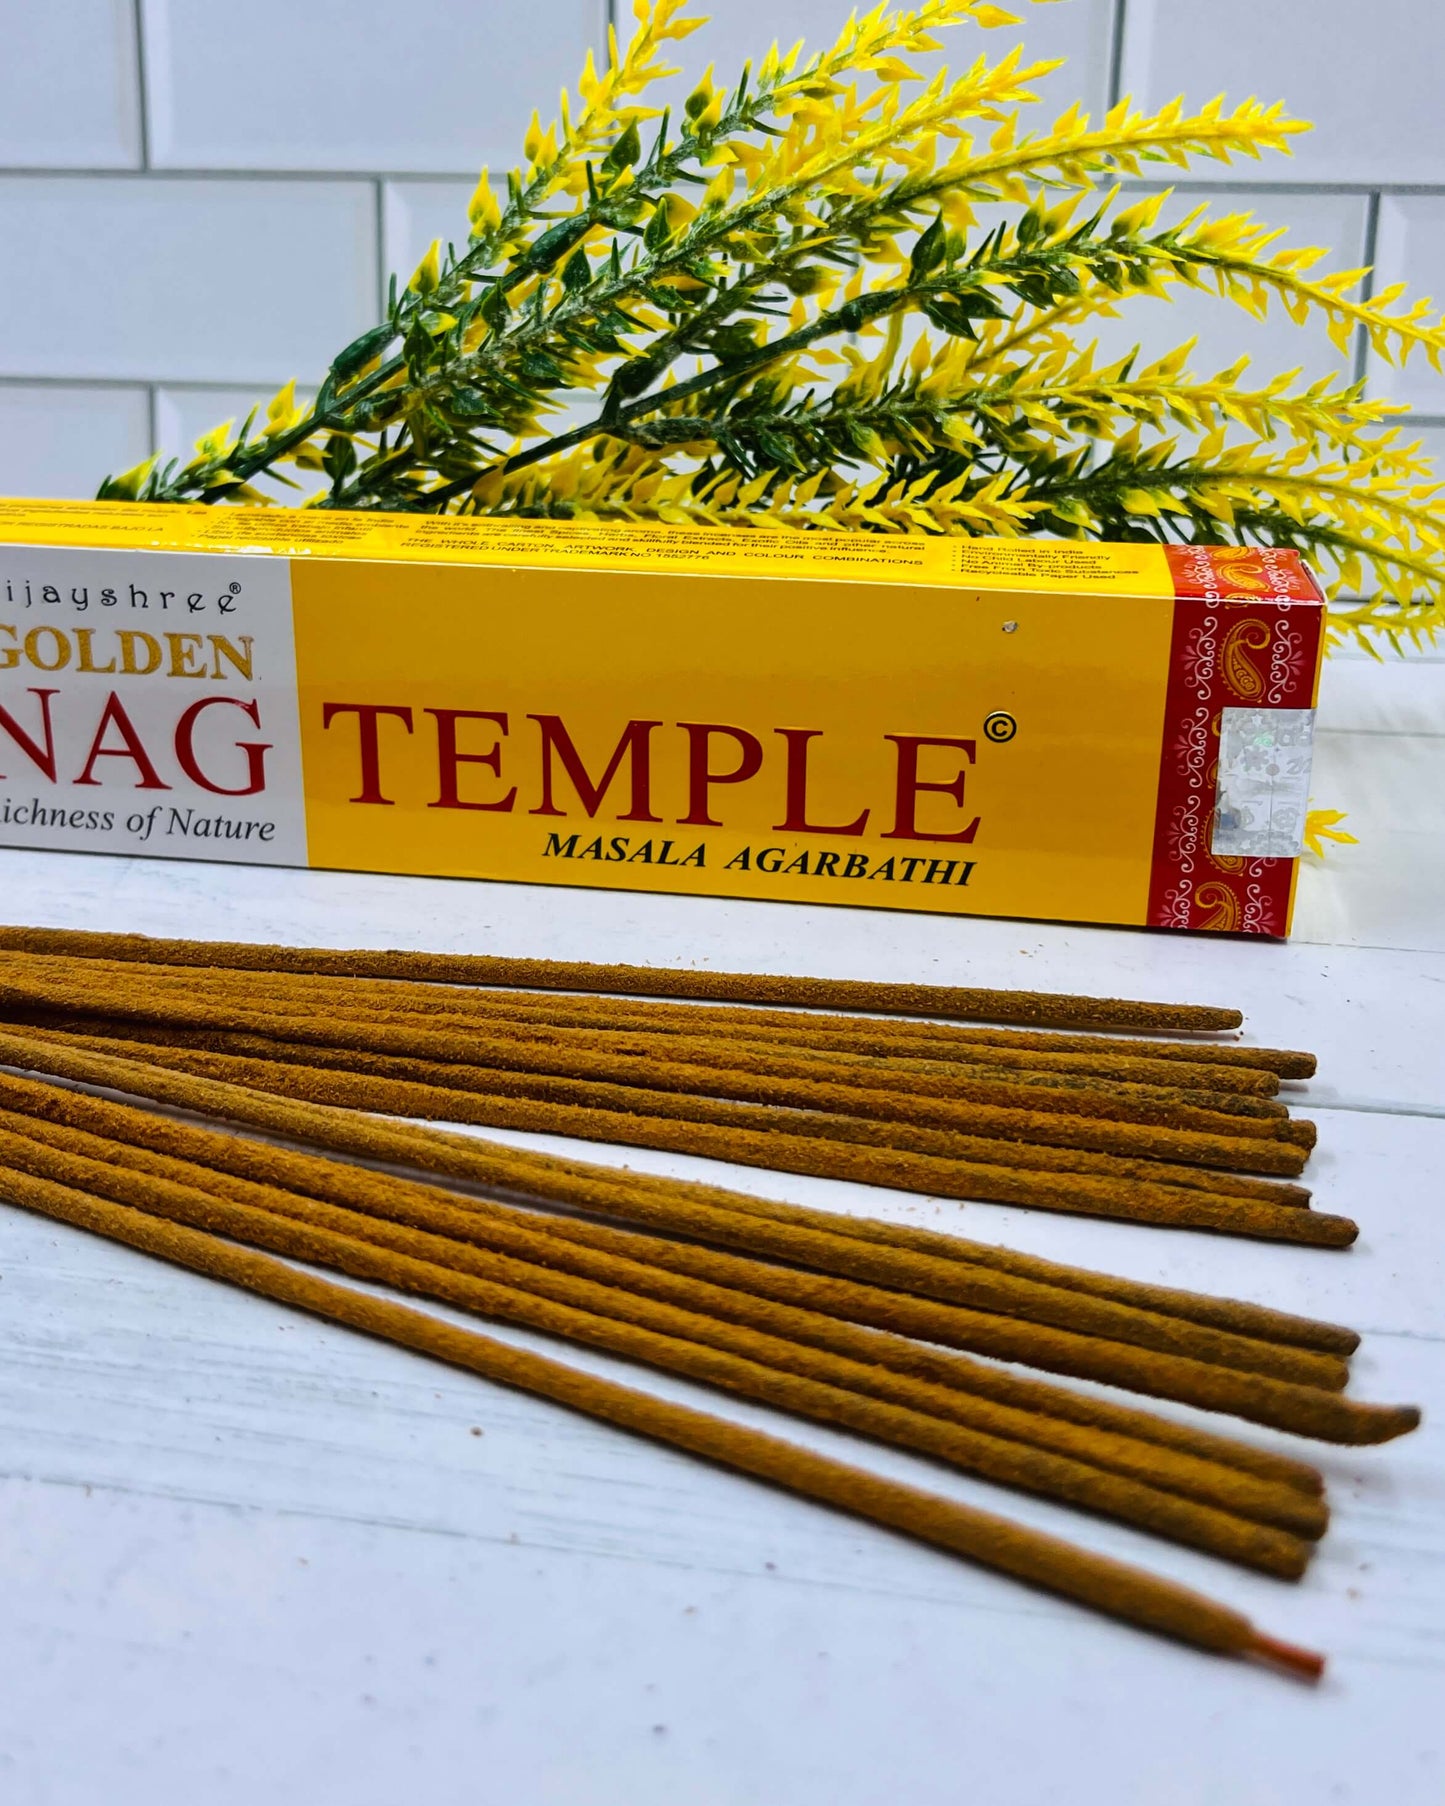 Vijayshree Golden Nag Temple incense